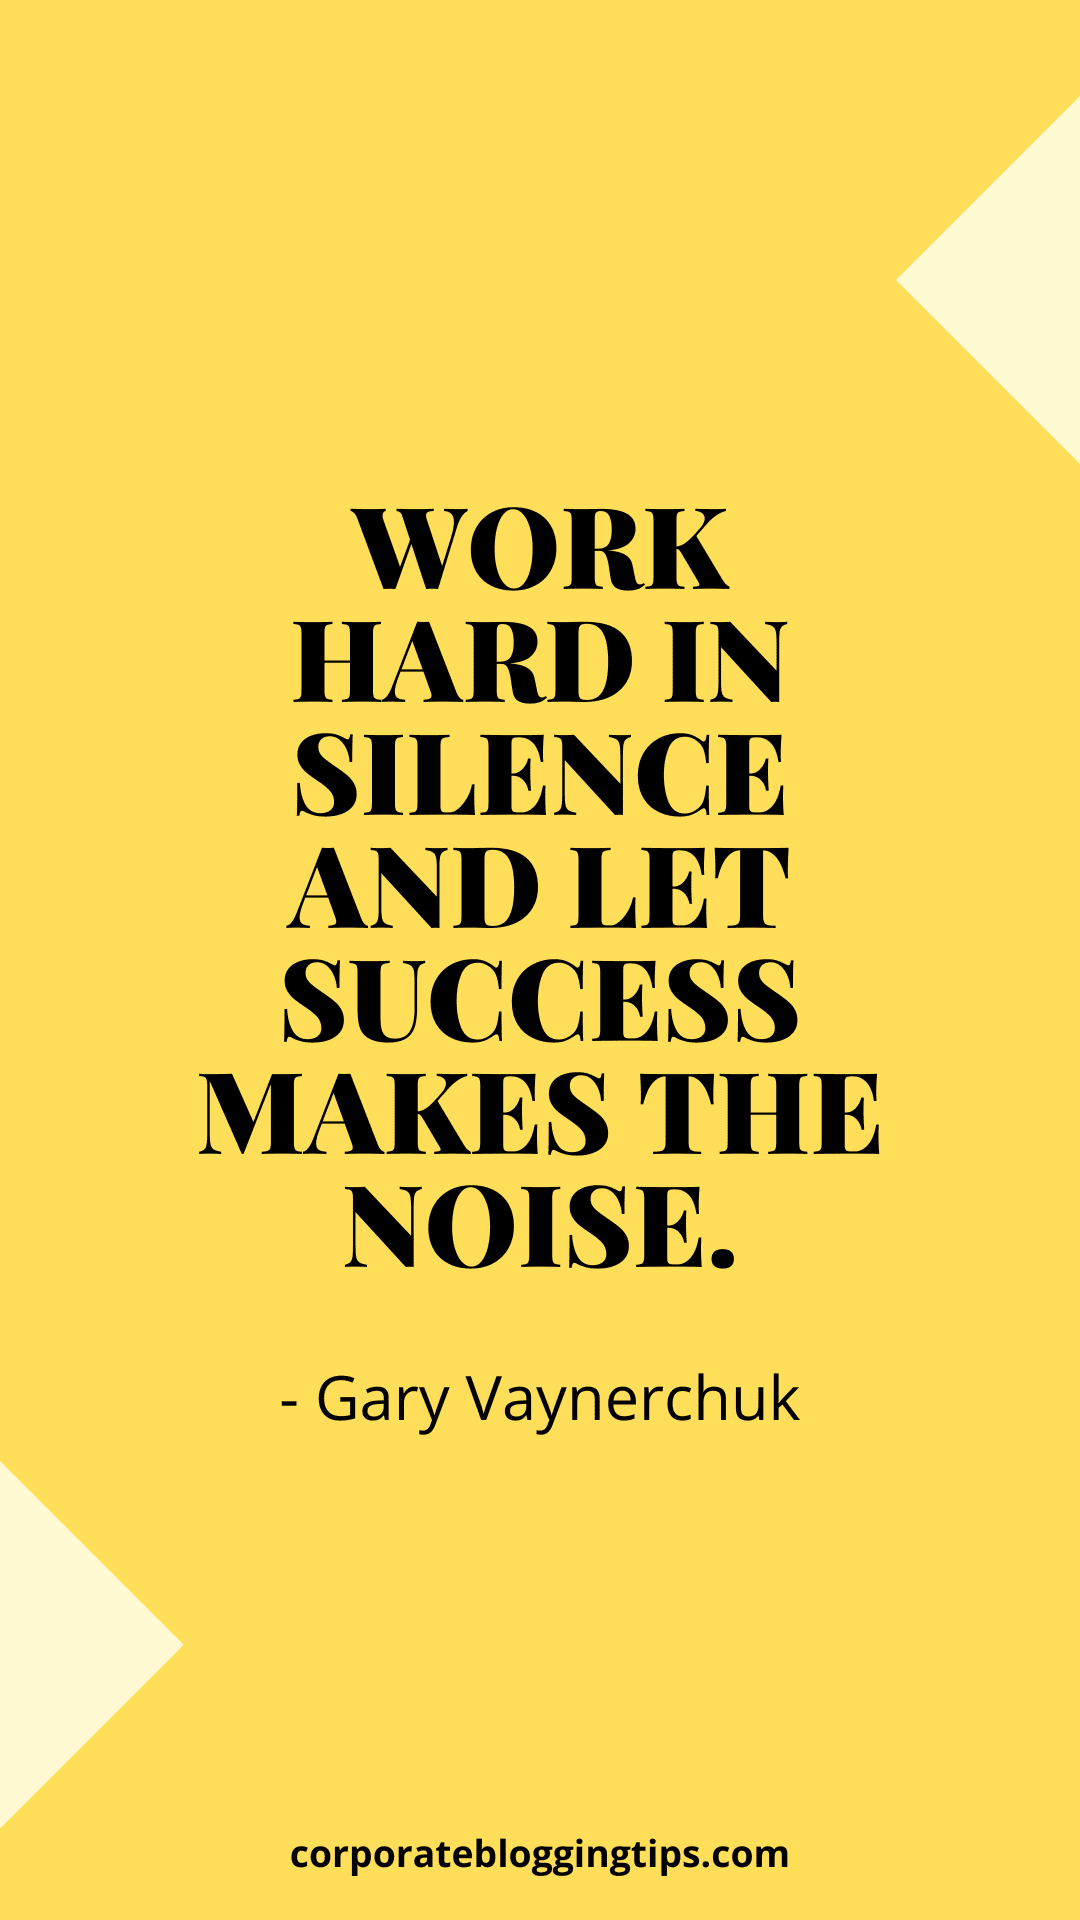 Gary Vaynerchuk quotes for success